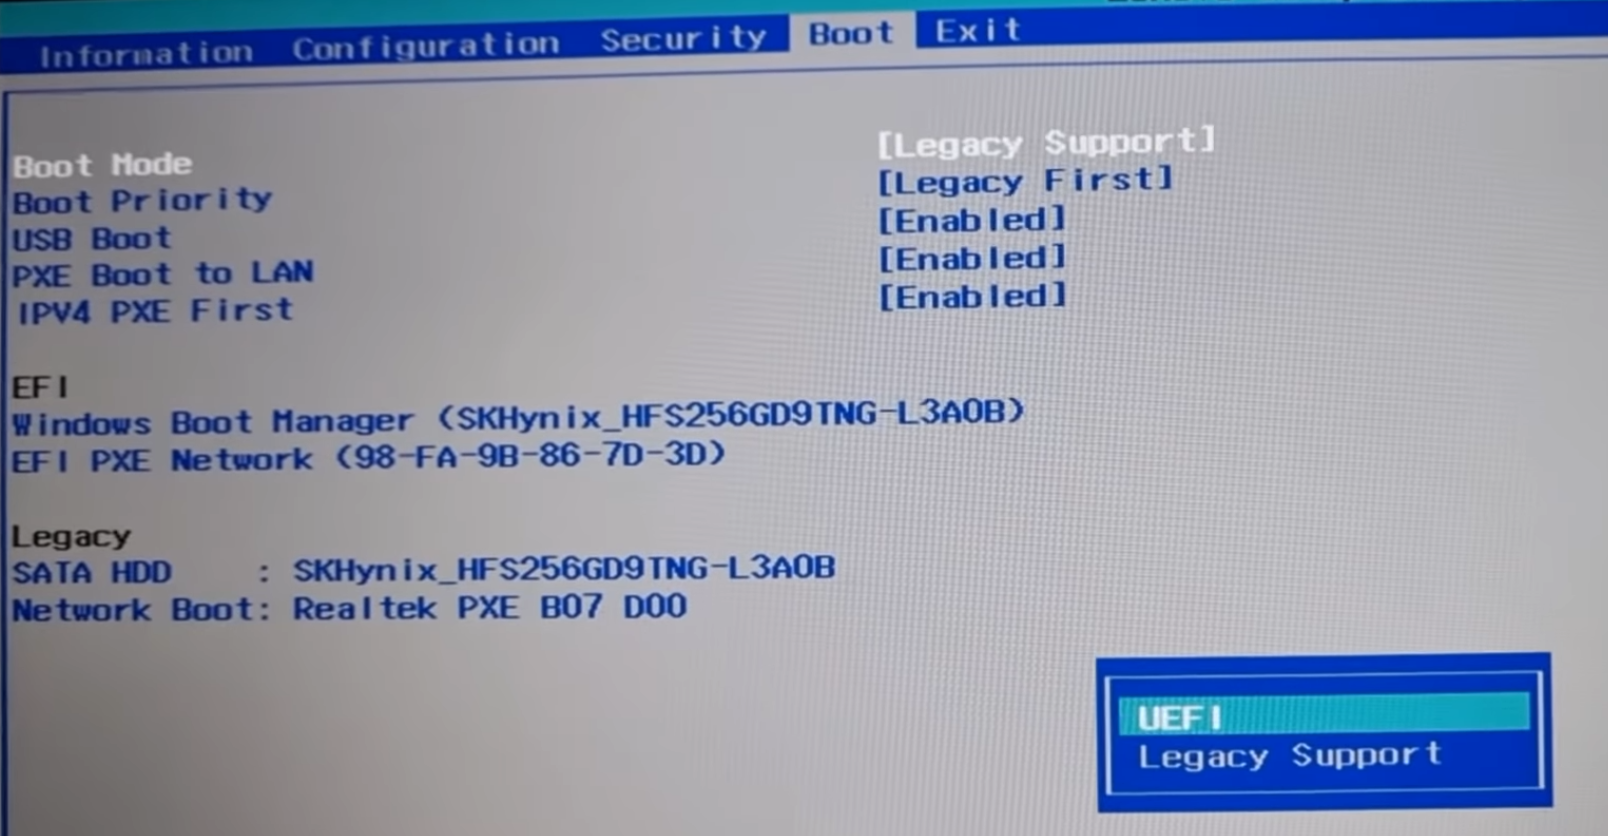 Uefi bios windows 11. Биос виндовс 11. BIOS Windows 11. Security Boot enabled BIOS. Как включить безопасную загрузку в биос MSI для виндовс 11.